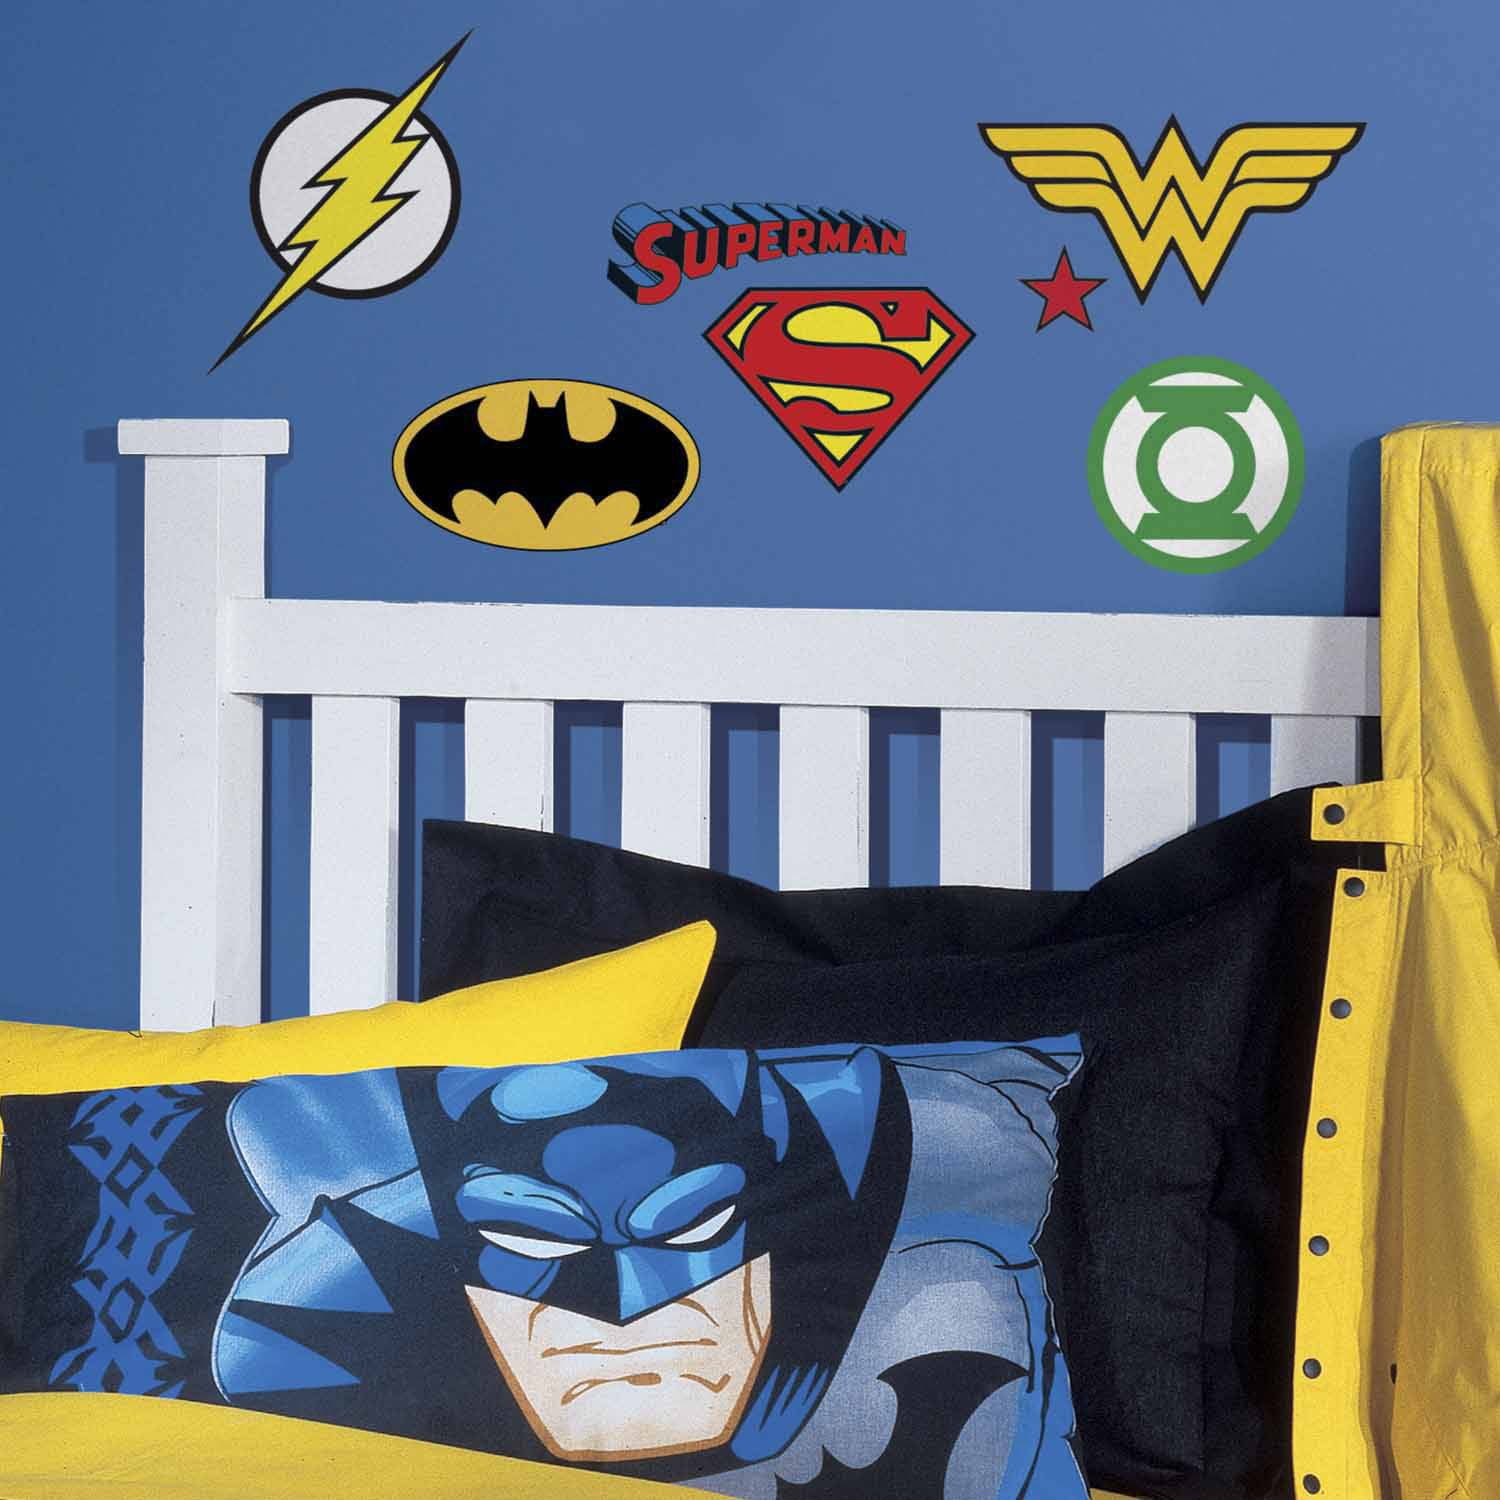 Batman Yellow Logo bumper sticker wall decor Large vinyl decal 12.5" x 7.5"